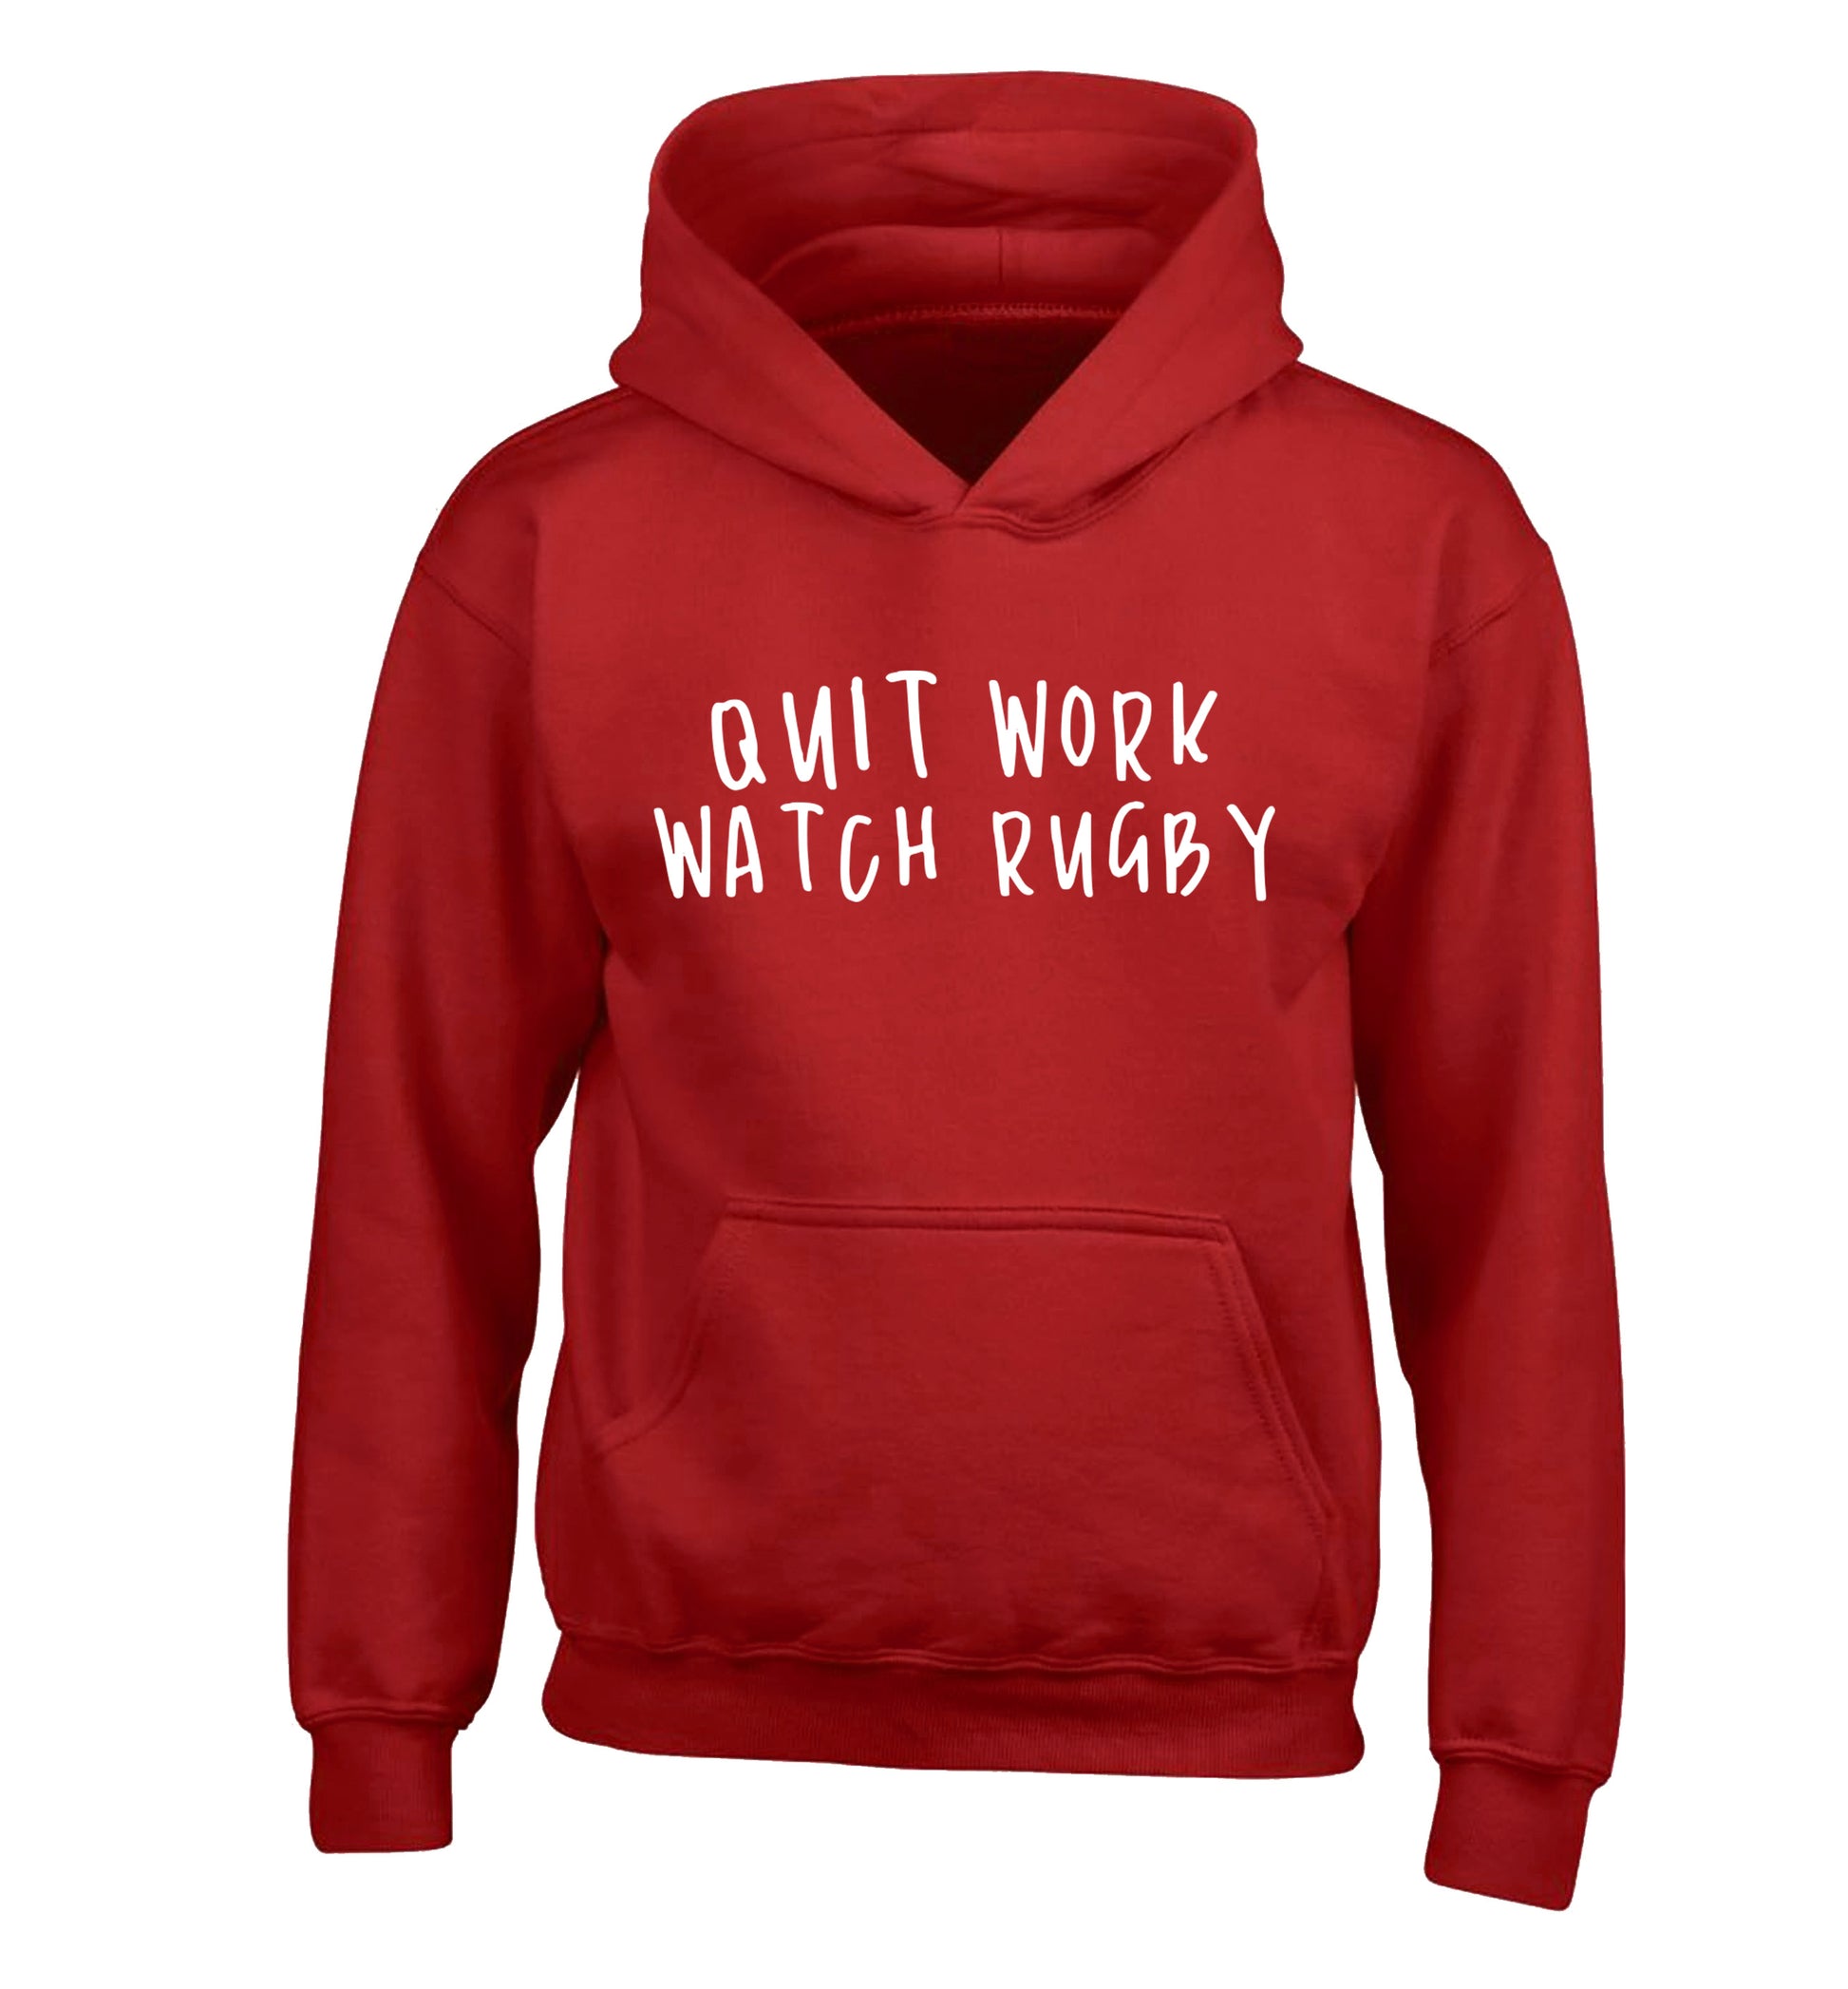 Quit work watch rugby children's red hoodie 12-13 Years